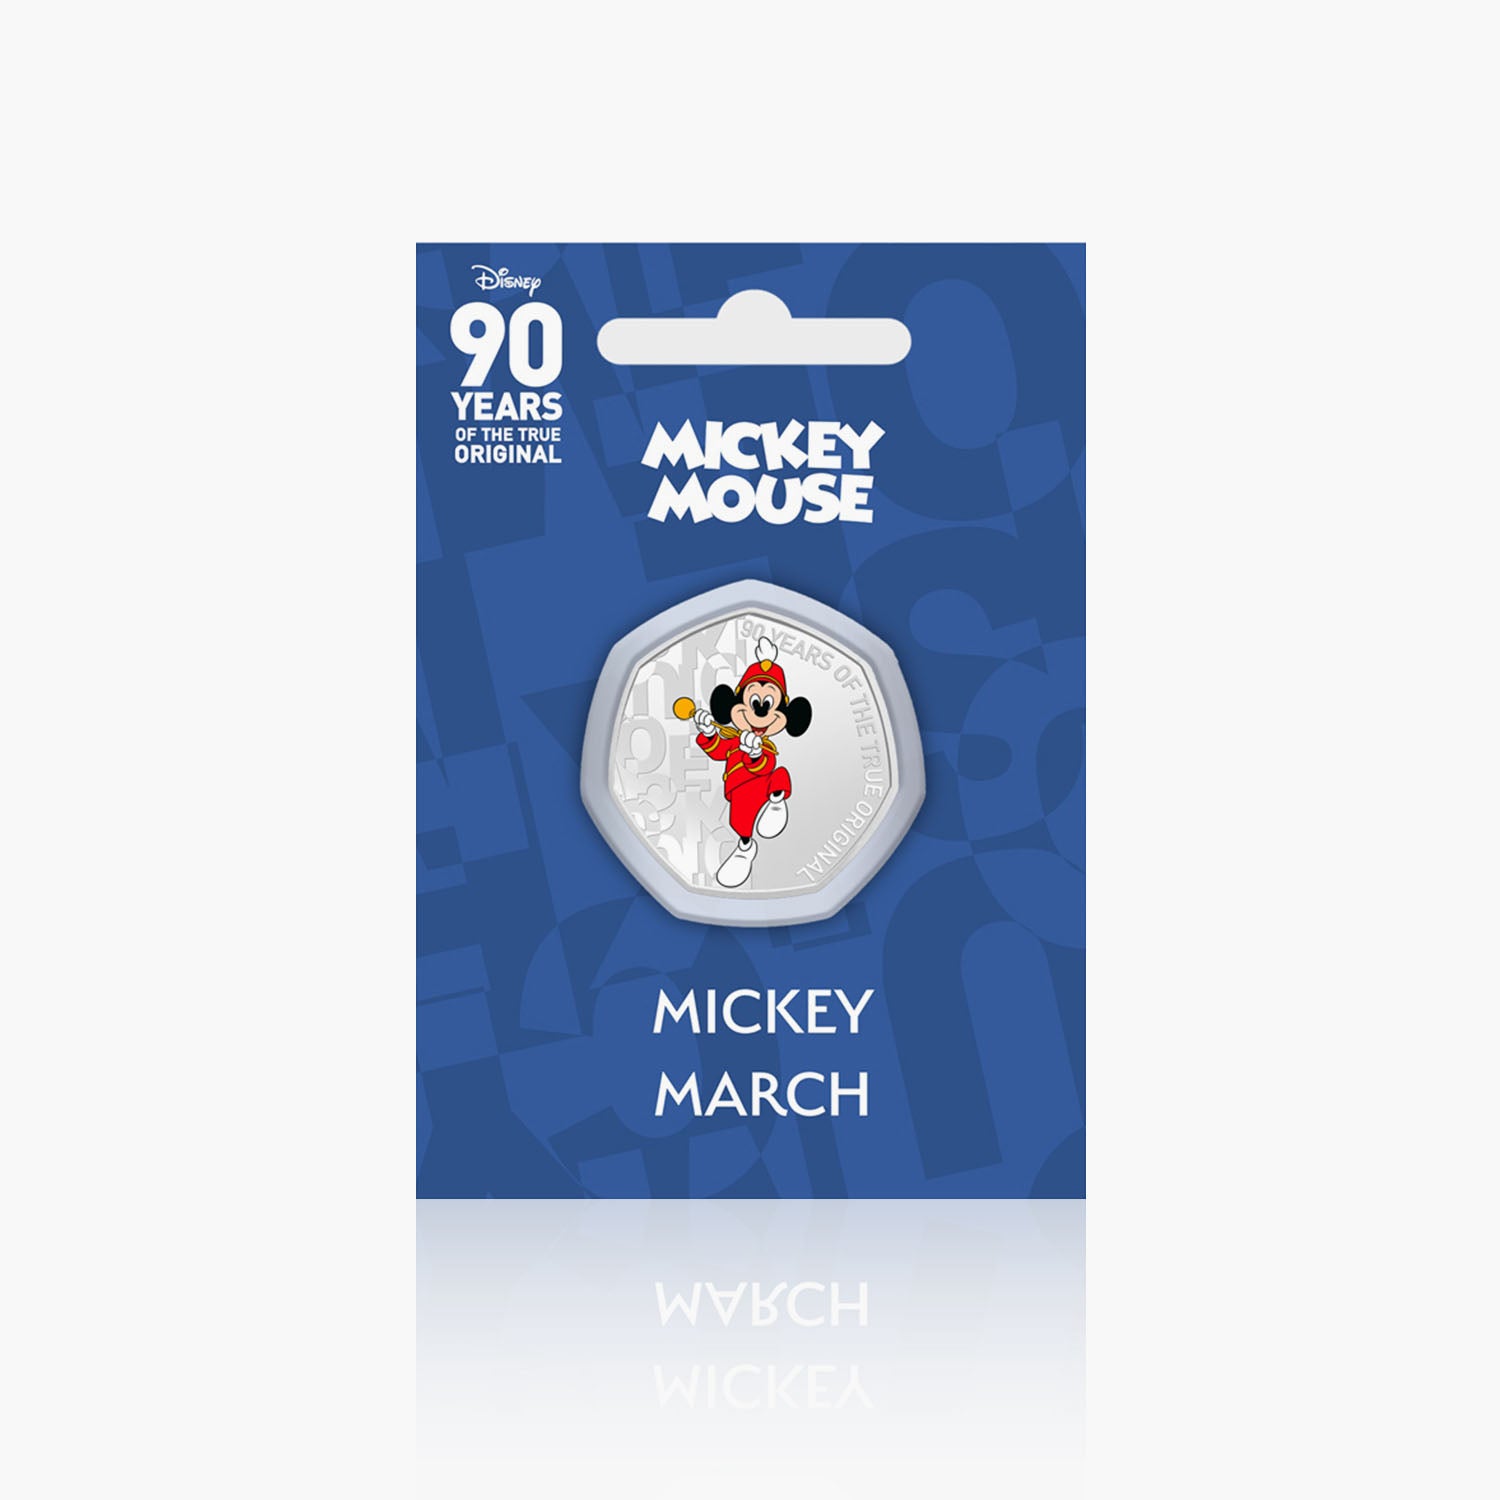 Mickey March Silver-Plated Commemorative